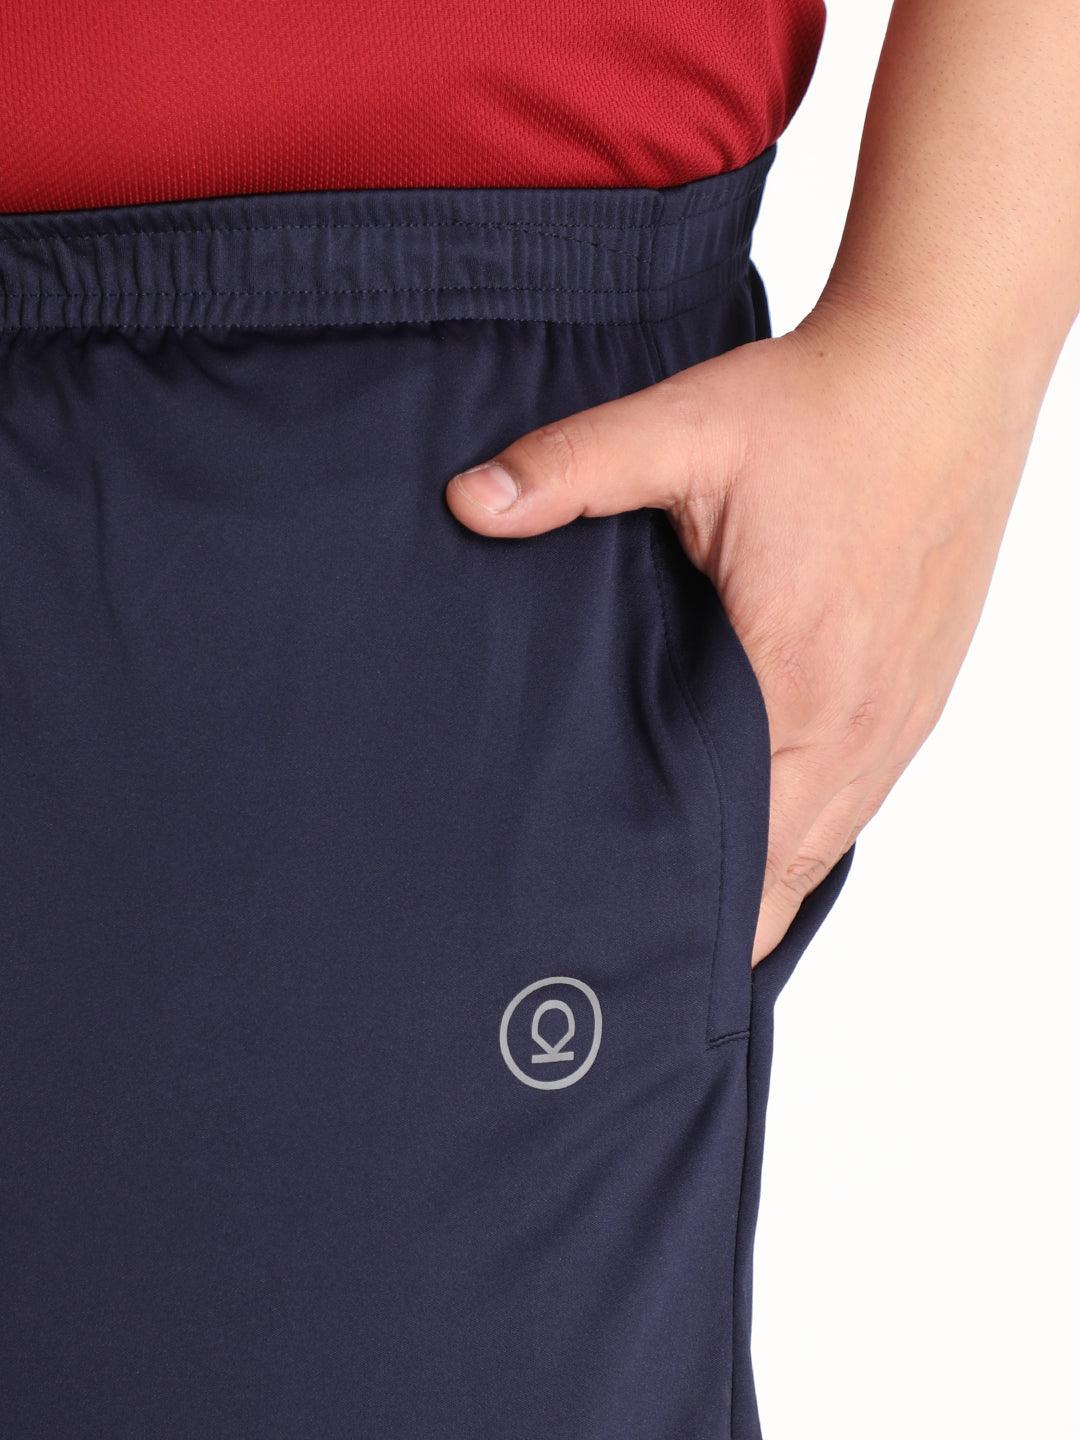 Men Sports Gym Trackpants Running Lower With Pocket | CHKOKKO - Chkokko